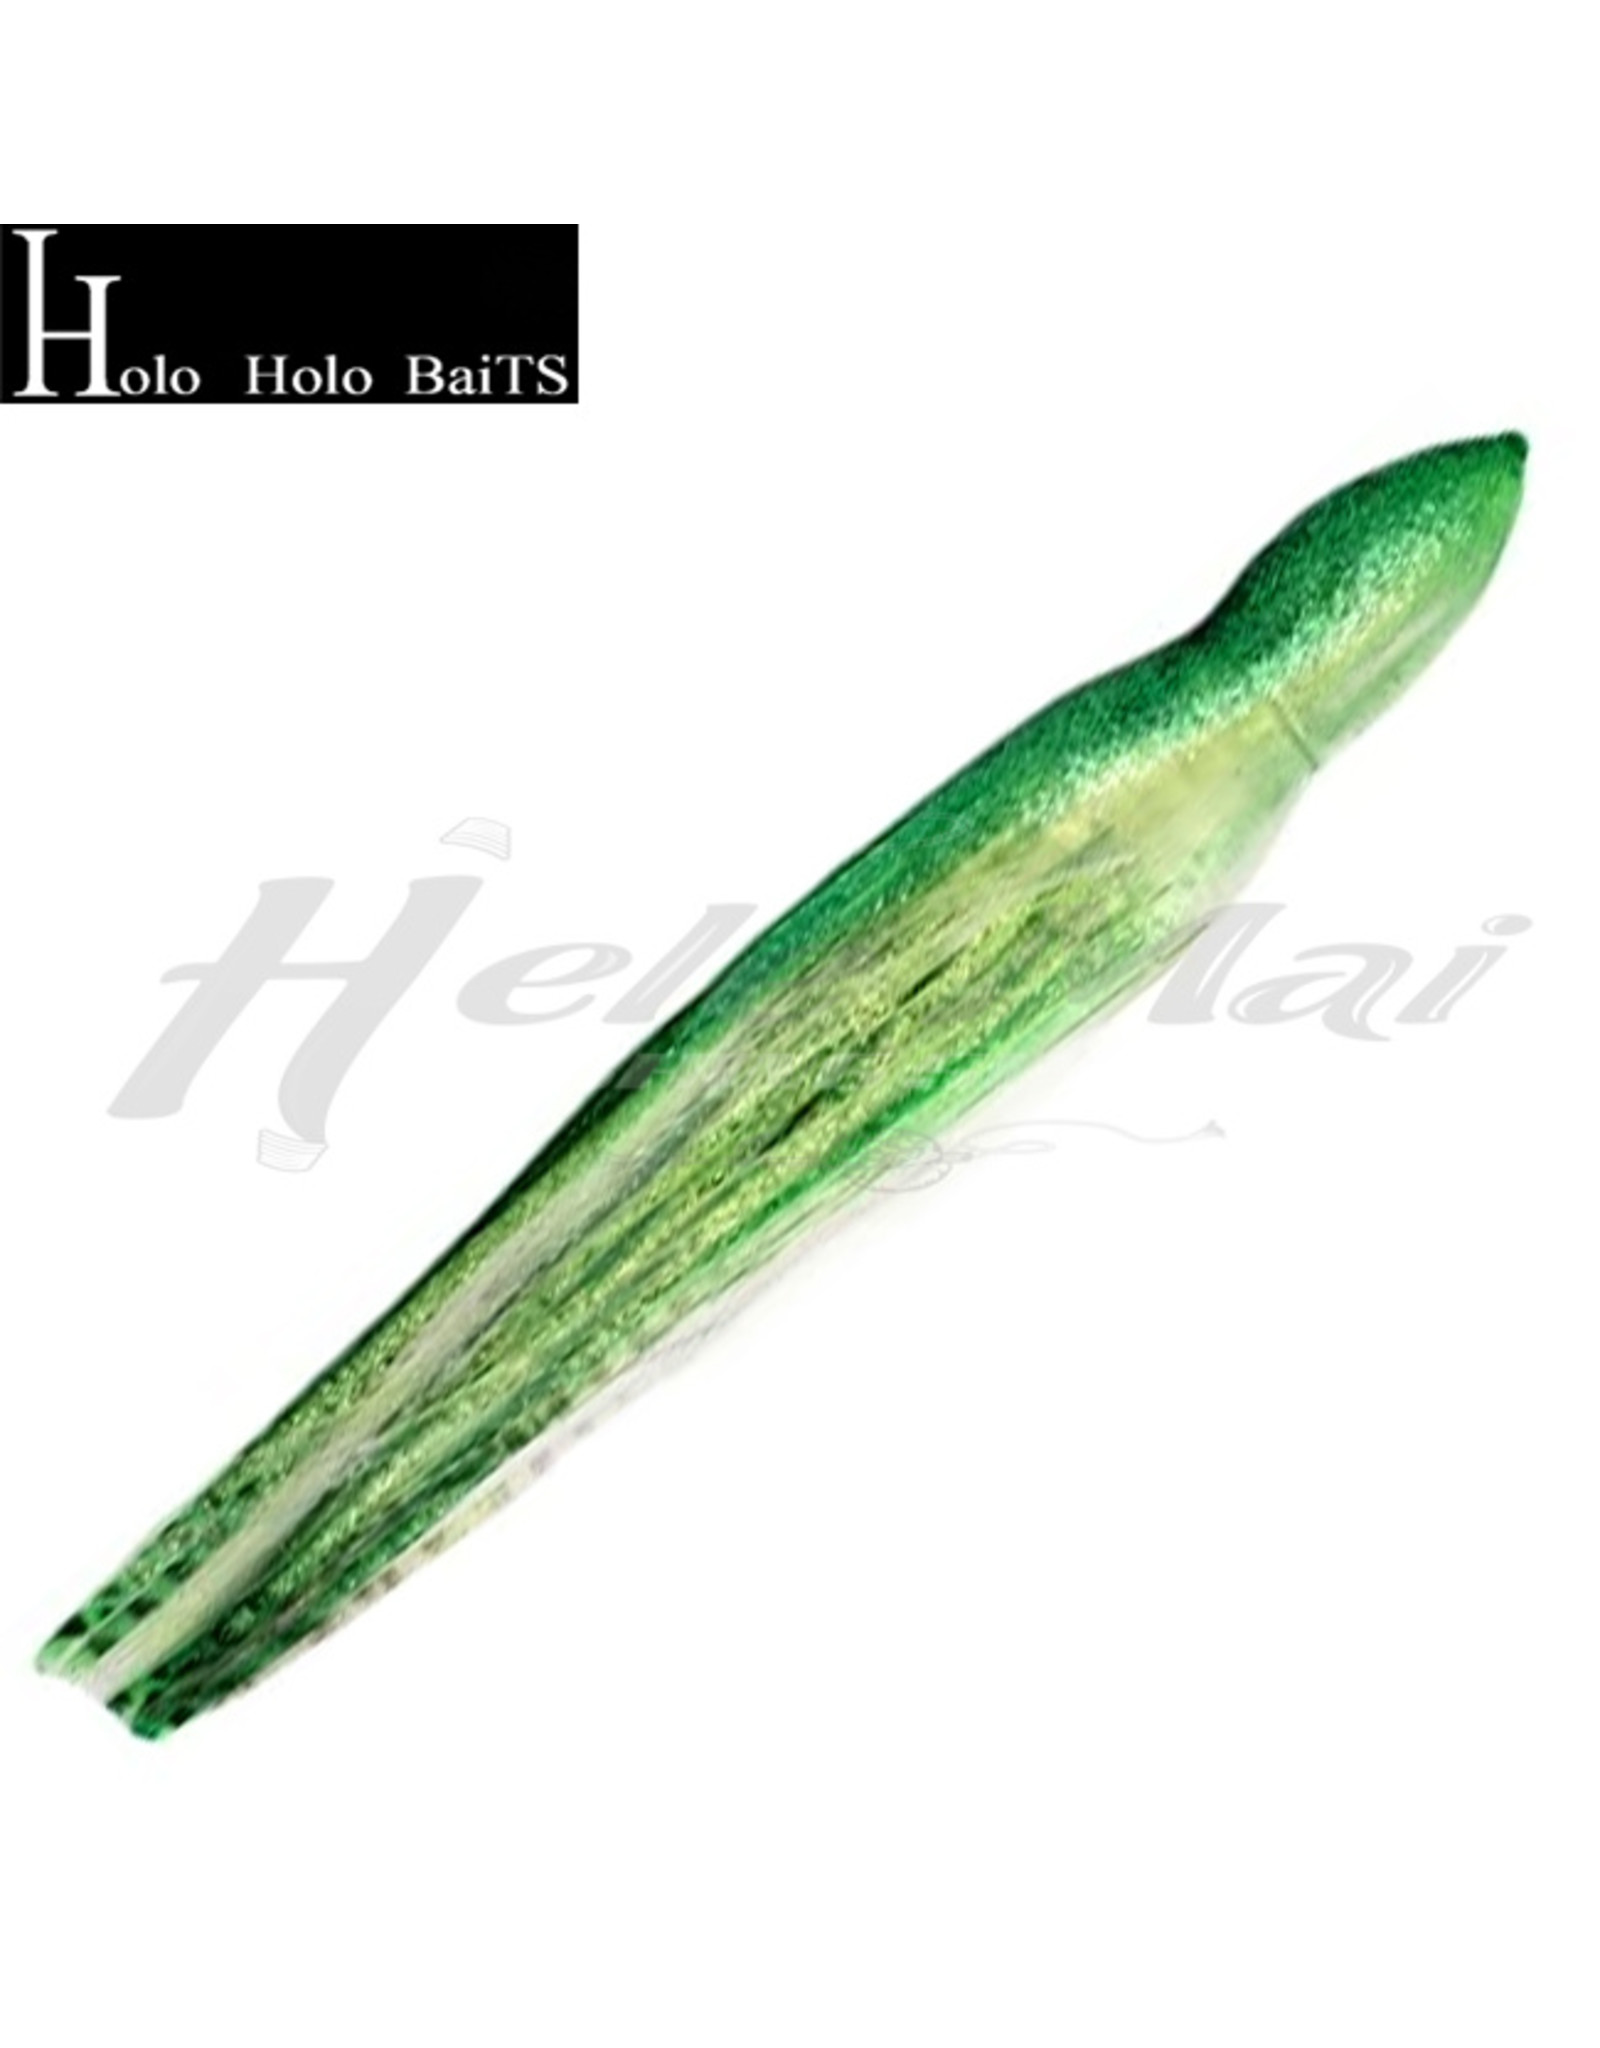 HOLO HOLO HAWAII (HHH) HH, 7" SQUID SKIRT GREEN SILVER DOTS 0639